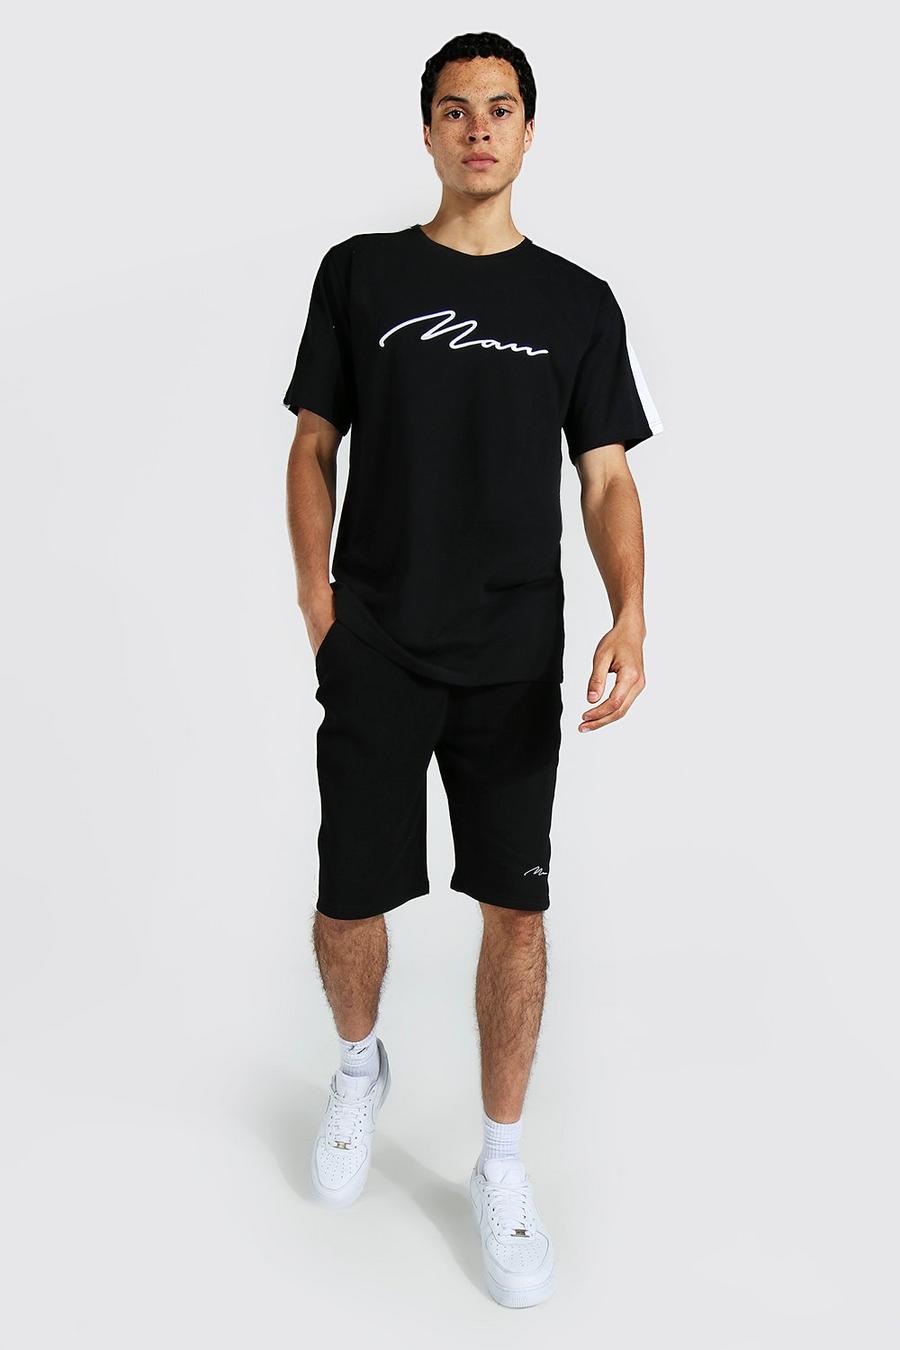 Tall - ensemble avec t-shirt à empiècement - MAN, Black image number 1